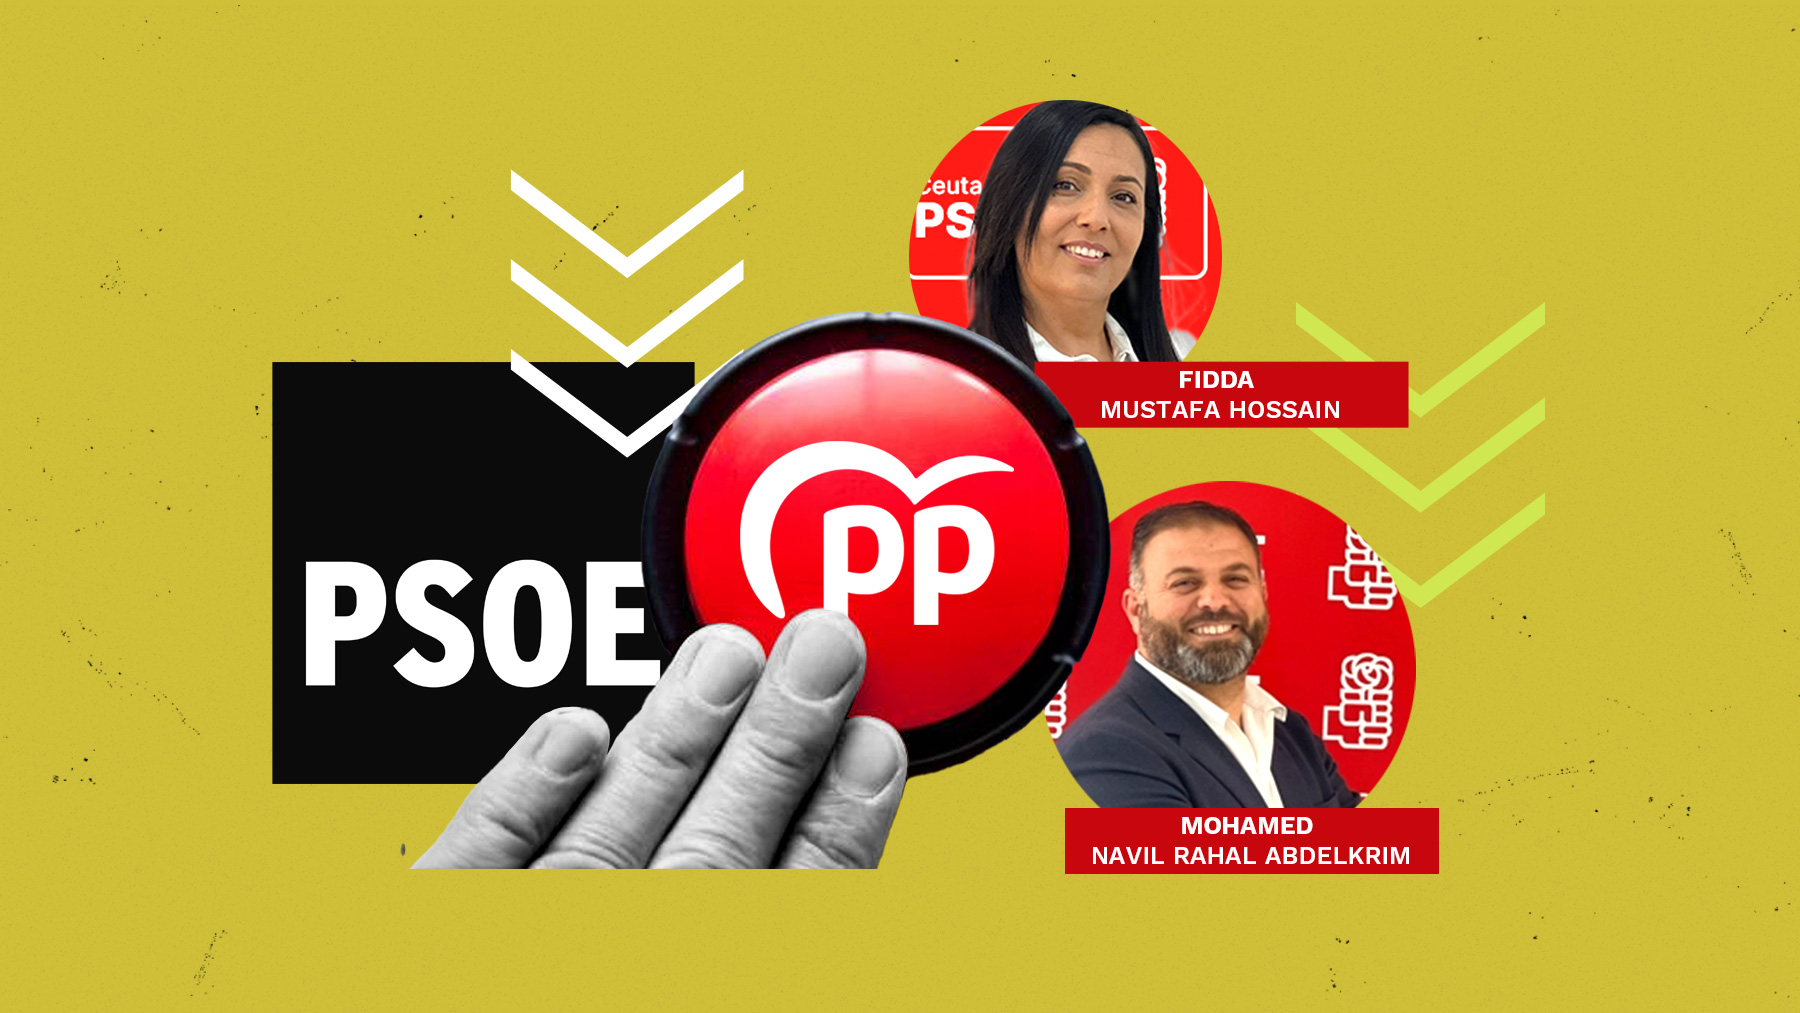 Fidda Mustafa y Mohamed Navil, diputados del PSOE en la Asamblea de Ceuta.